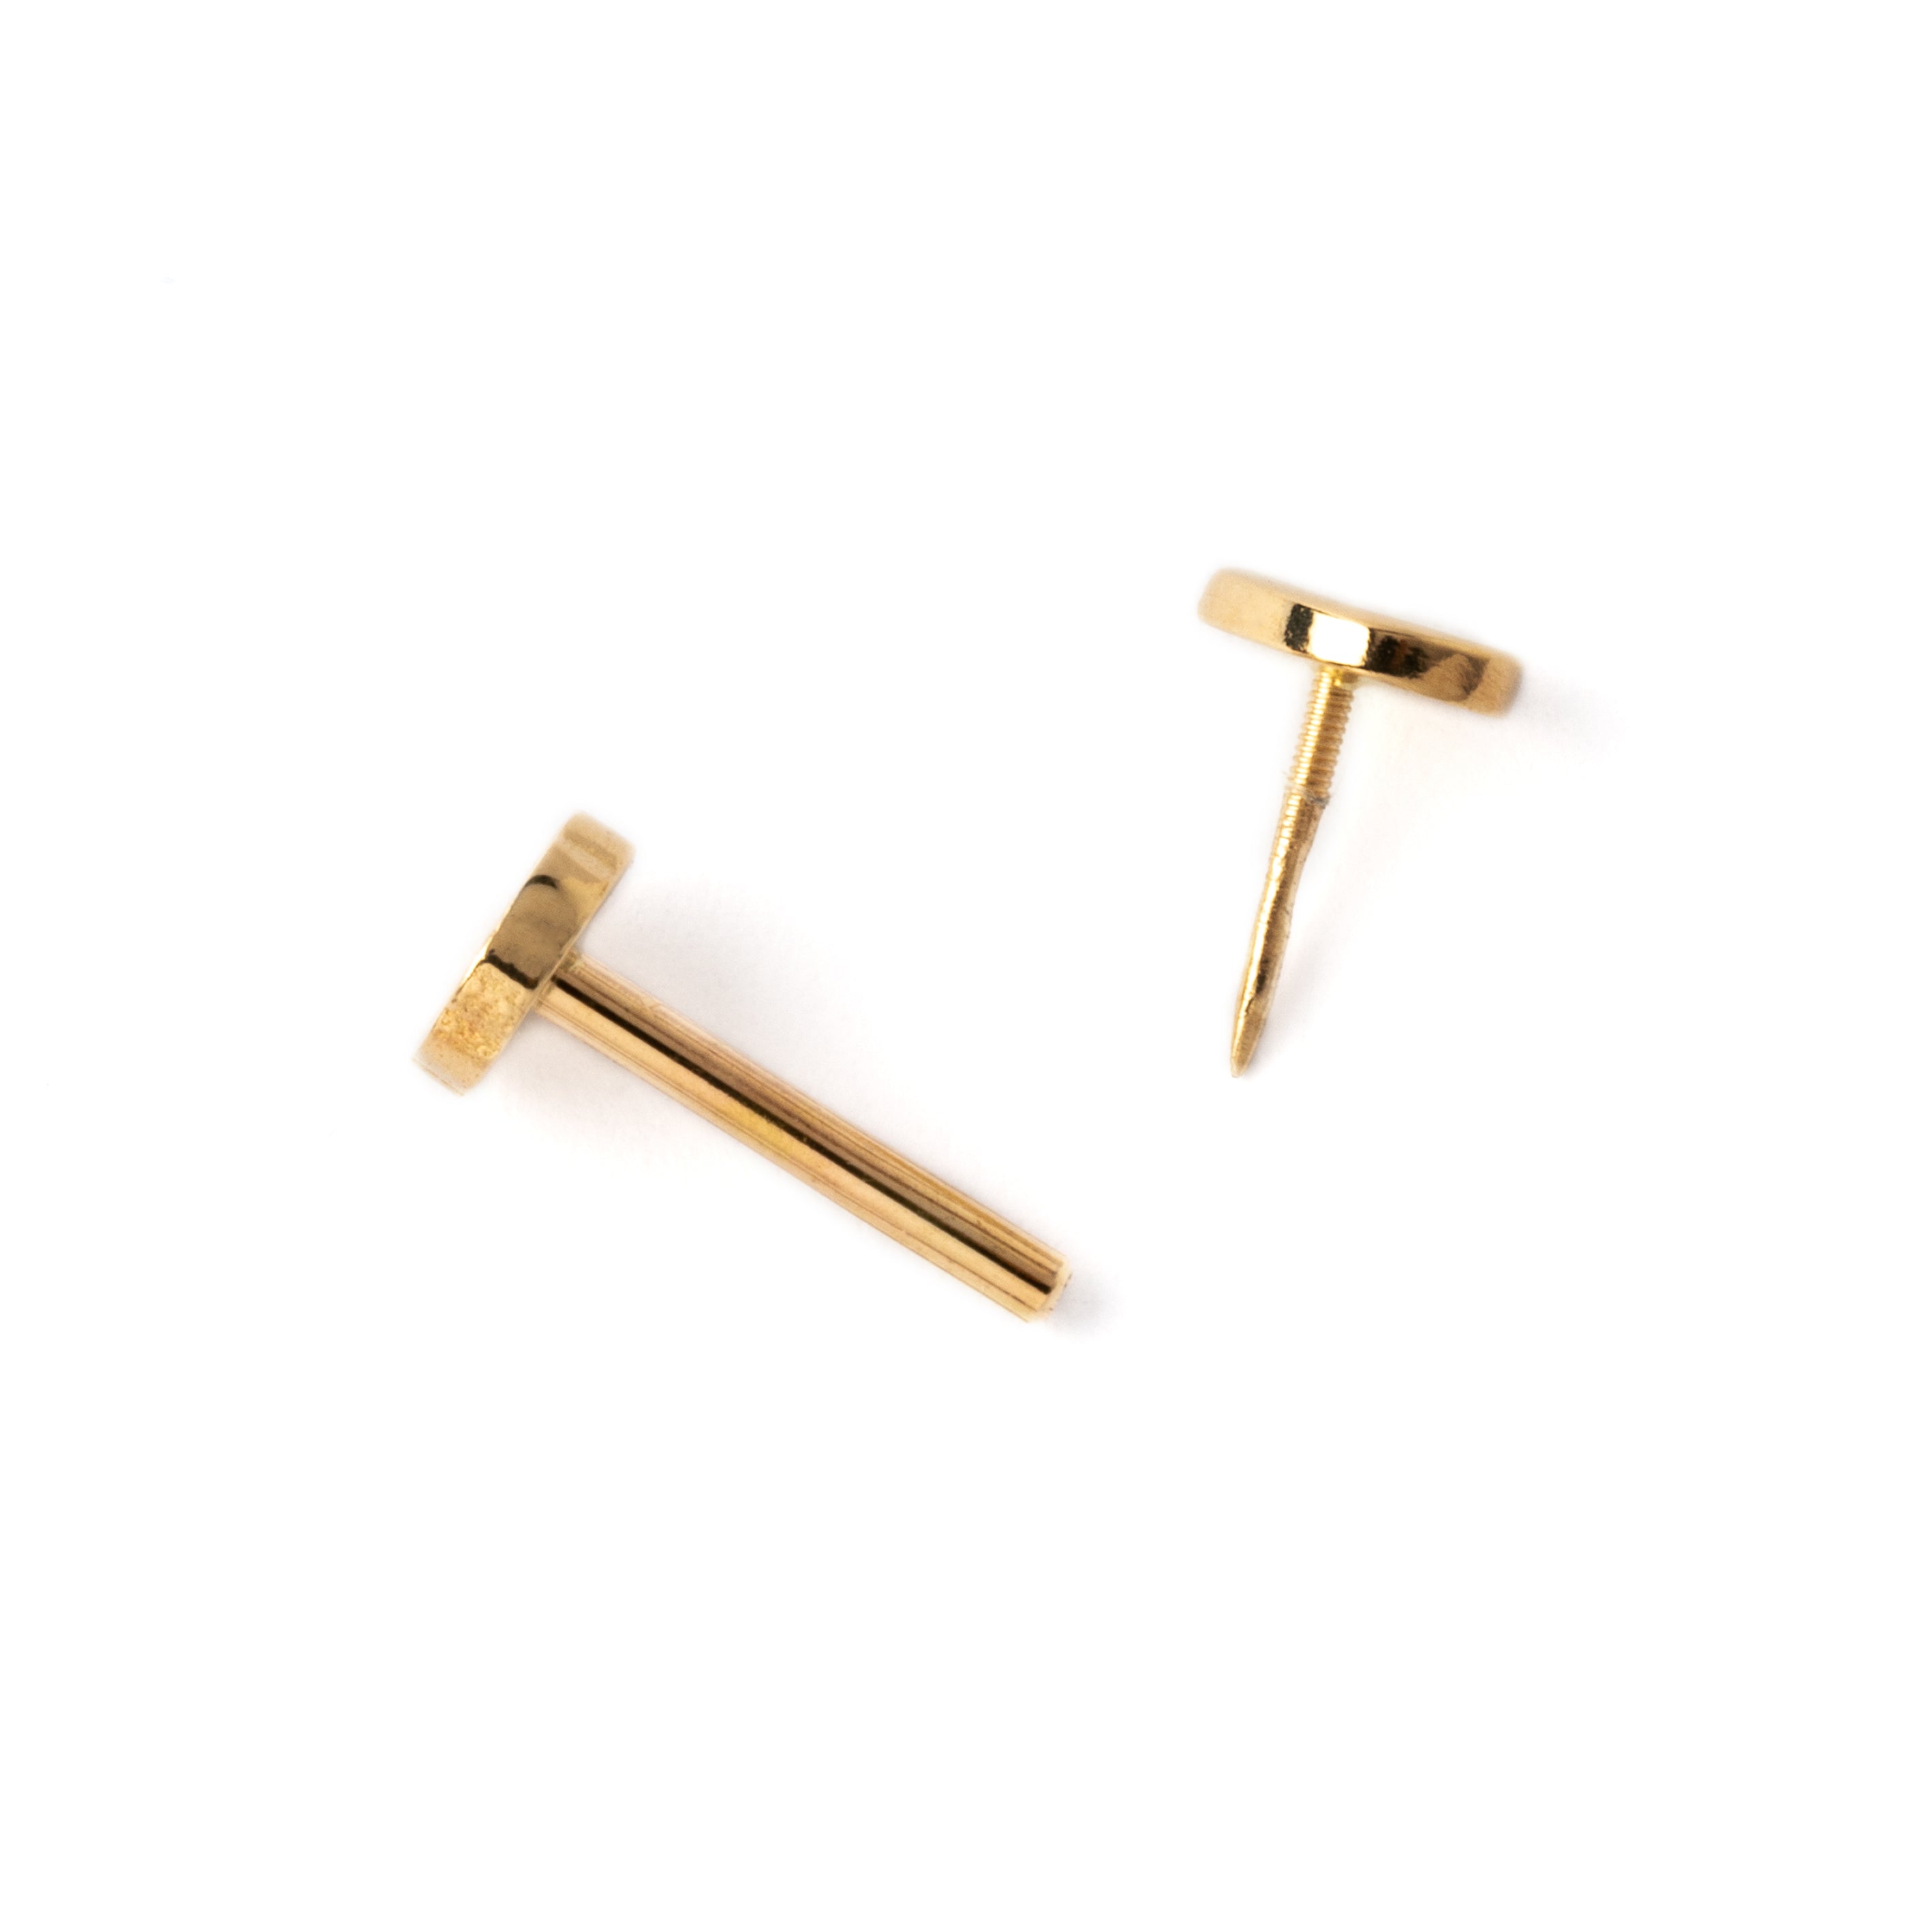 14k Gold internally threaded screw back earring 1.2mm (16g), 8mm, teardrop labret stud closure view